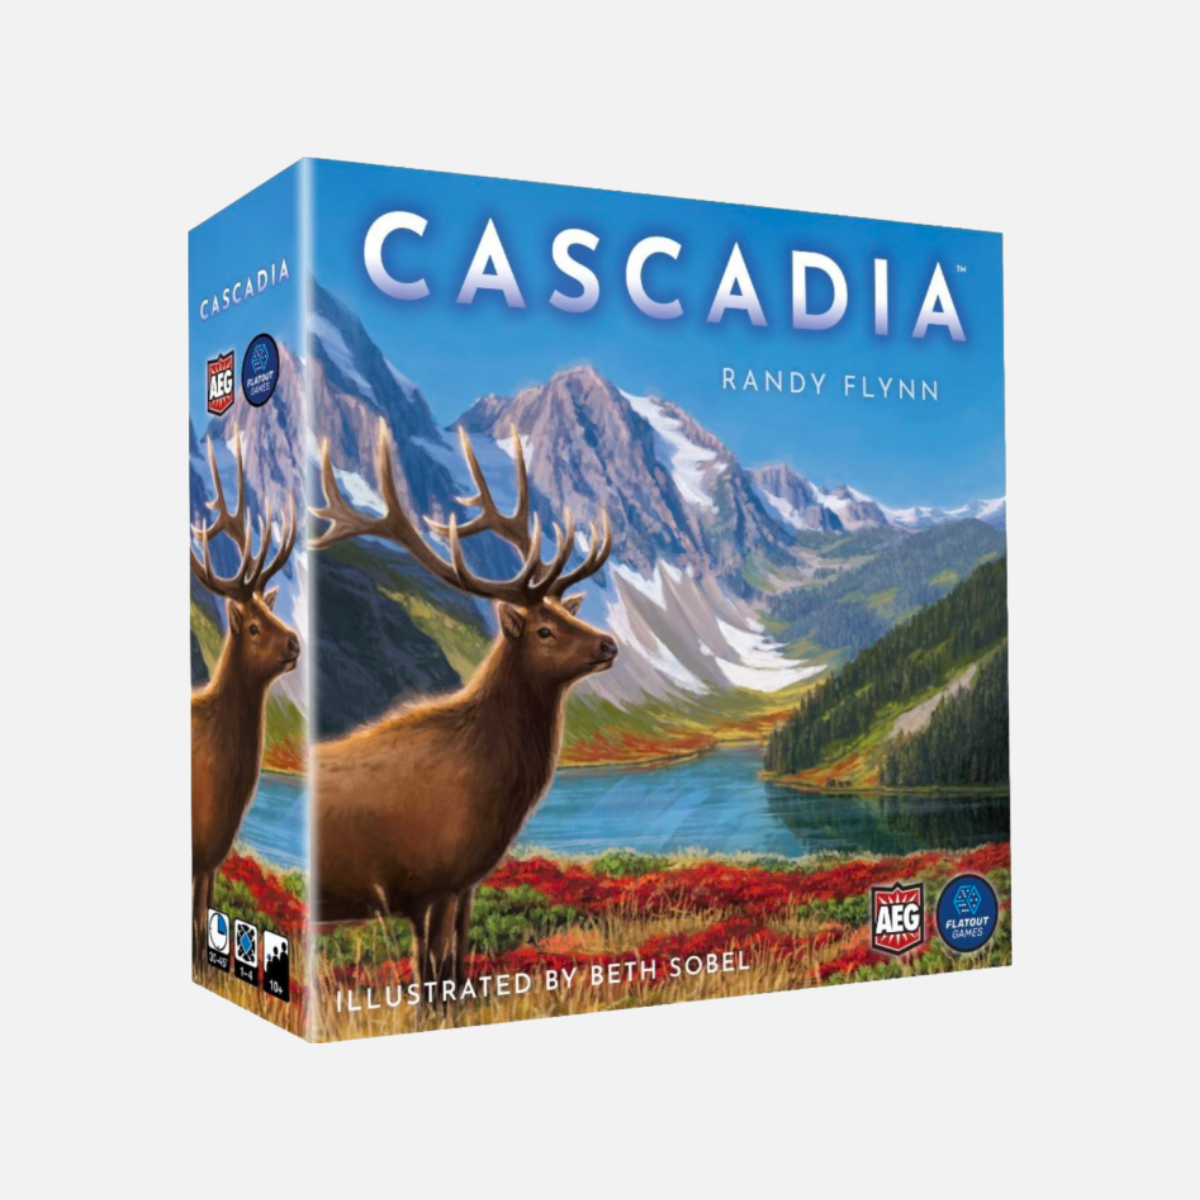 Cascadia board game